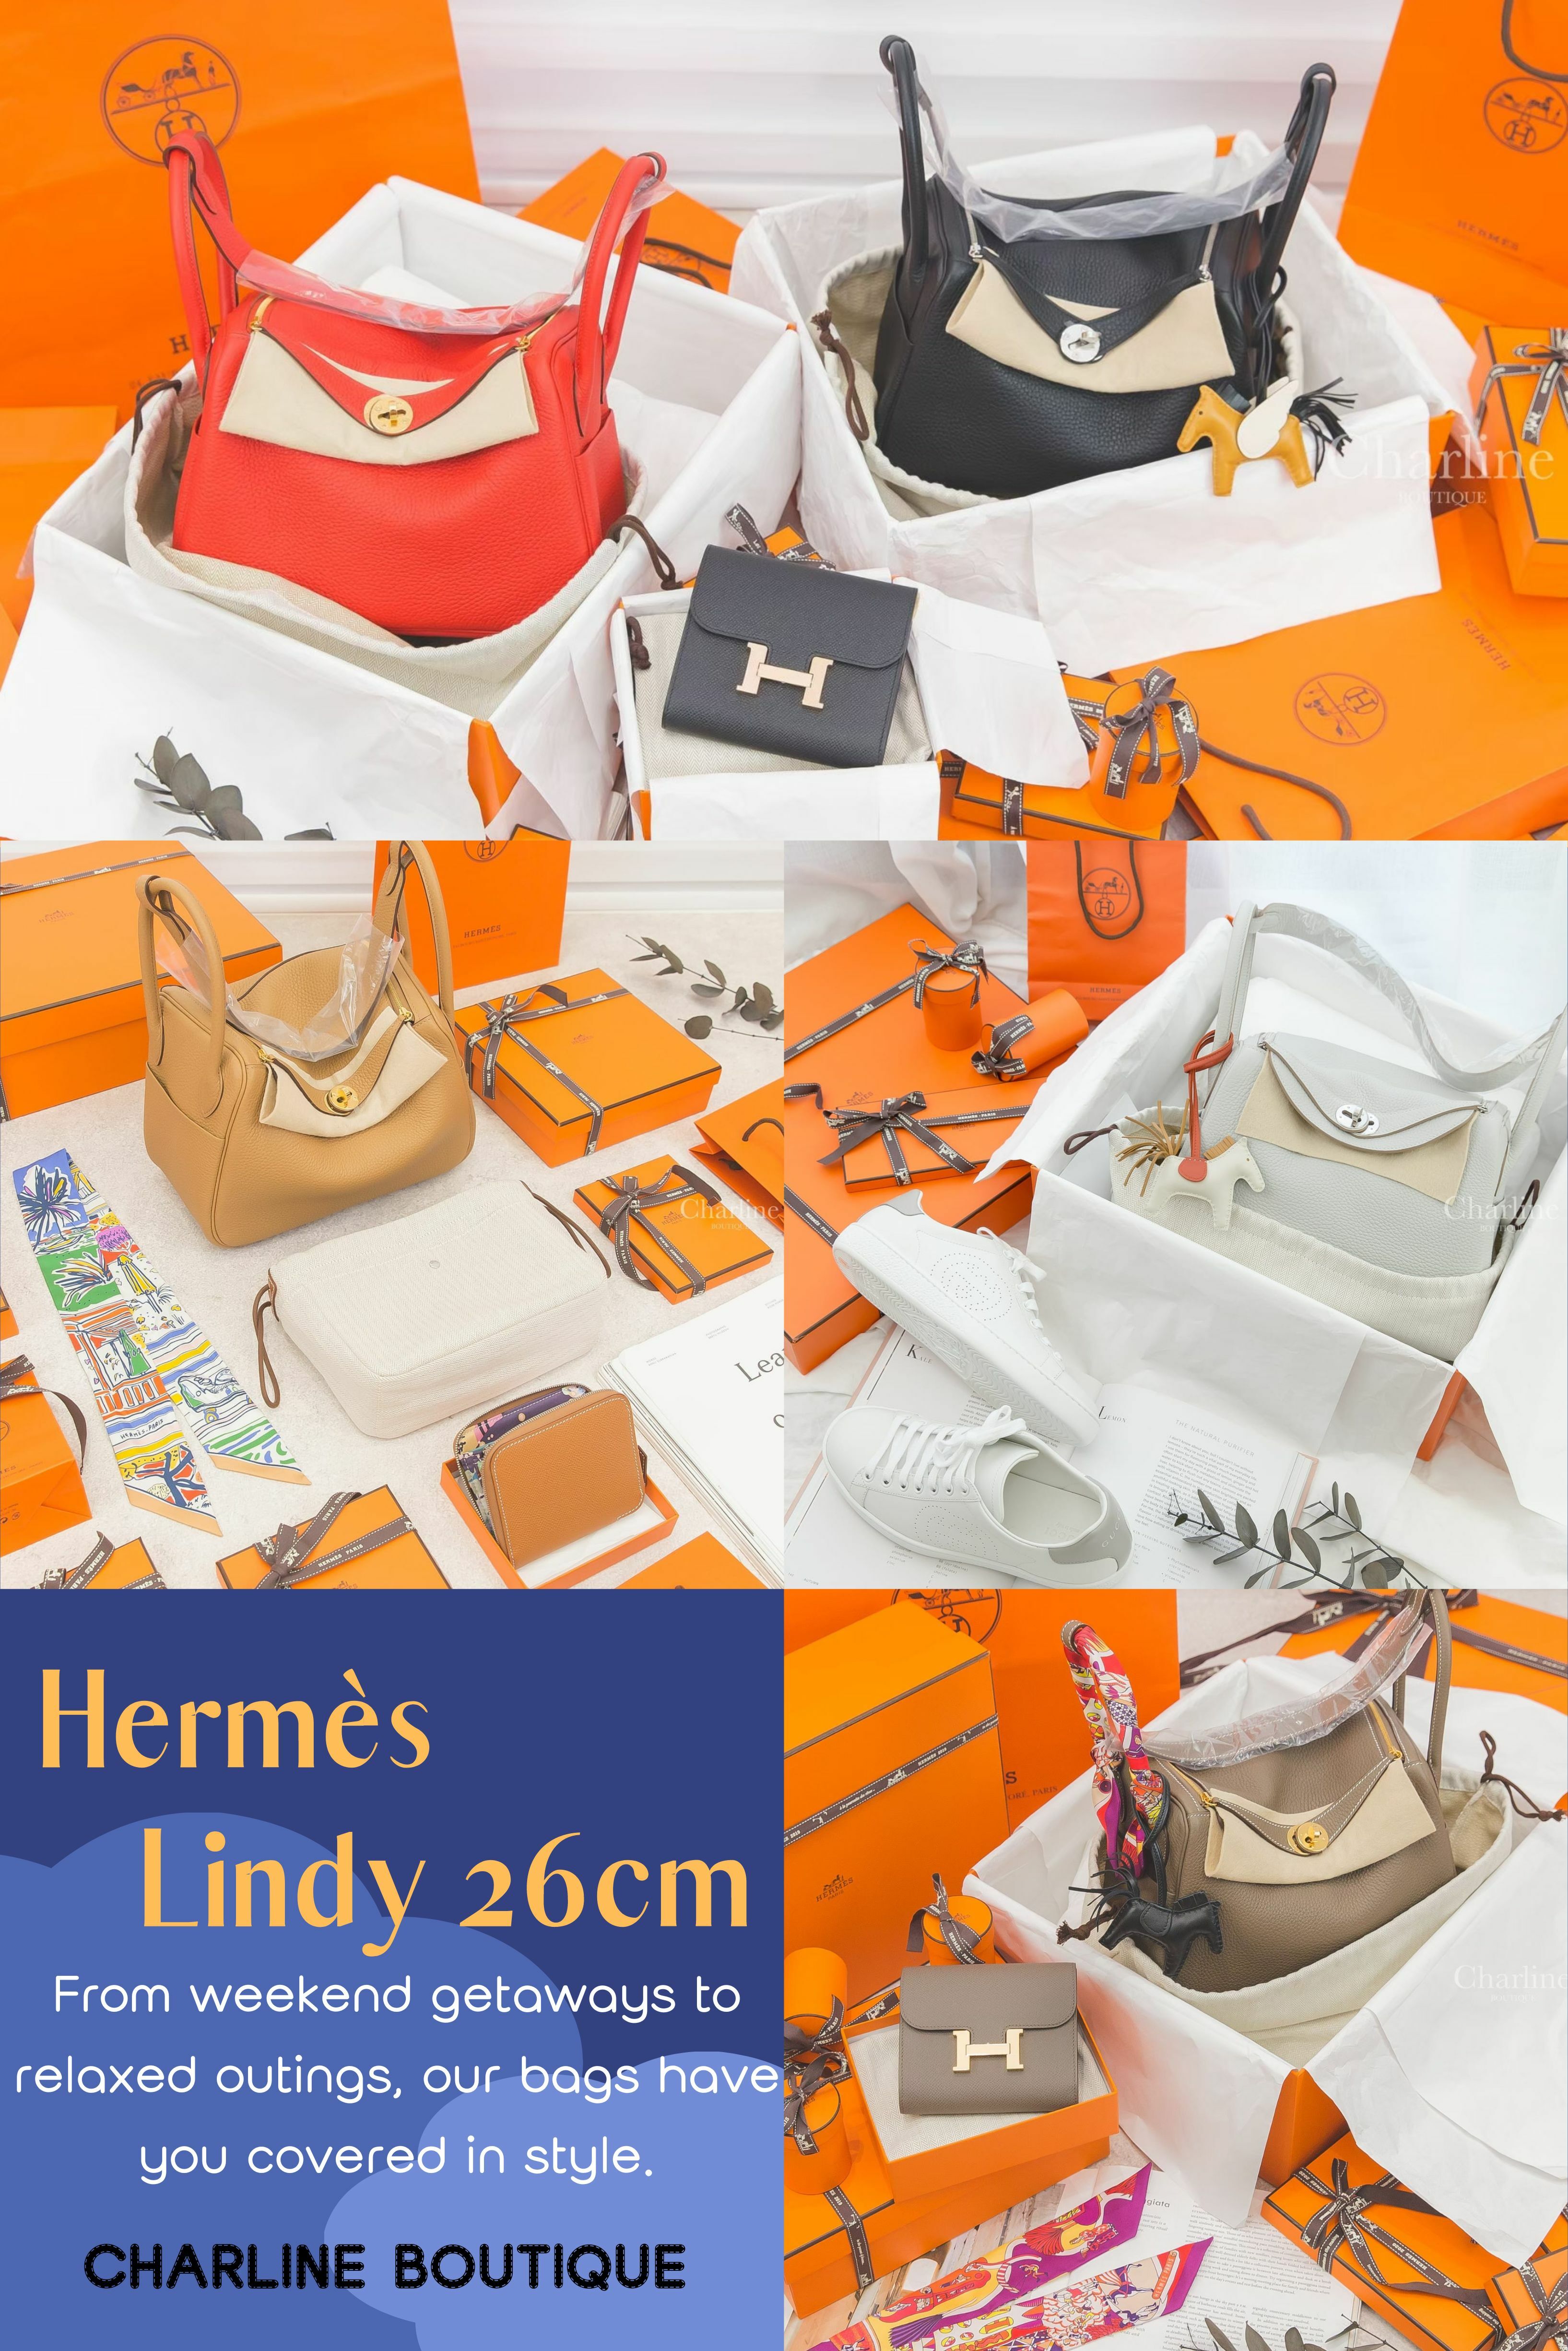 Hermès Lindy誕生於2007年，靈感源自1920年代紐約的Lindy Hop舞蹈，以獨特的造型和對稱結構著稱。雙拉鍊設計方便取用，雙手柄和肩帶使攜帶方式多樣，寬敞內部可容納日常所需，外觀輕鬆隨性。尺寸包括Mini、26cm、30cm和34cm，滿足不同需求。儘管尺寸微差，Hermès Lindy不論哪款都融合奢華與時尚，造訪Charline Boutique，找到您心愛的Lindy，享受購物樂趣吧！